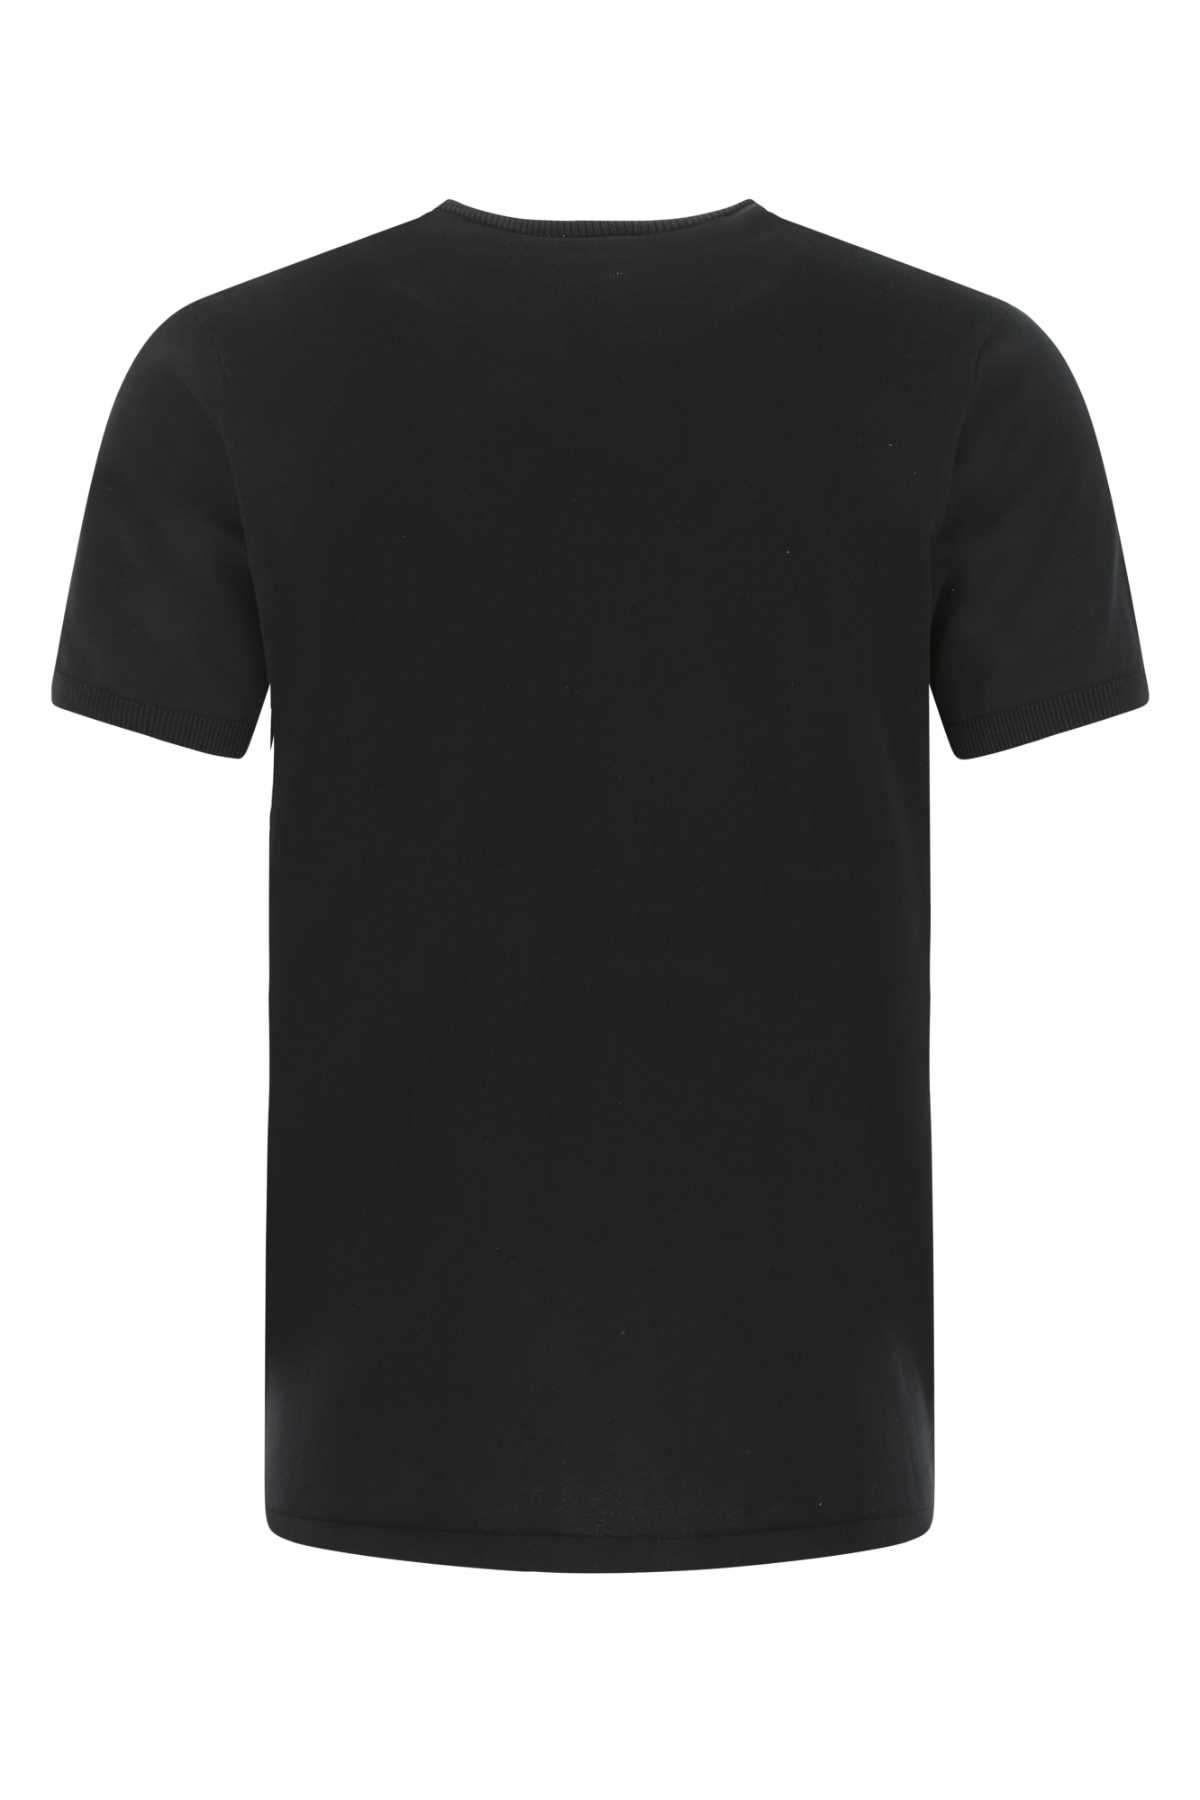 Aspesi Black Cotton T-shirt In 01241